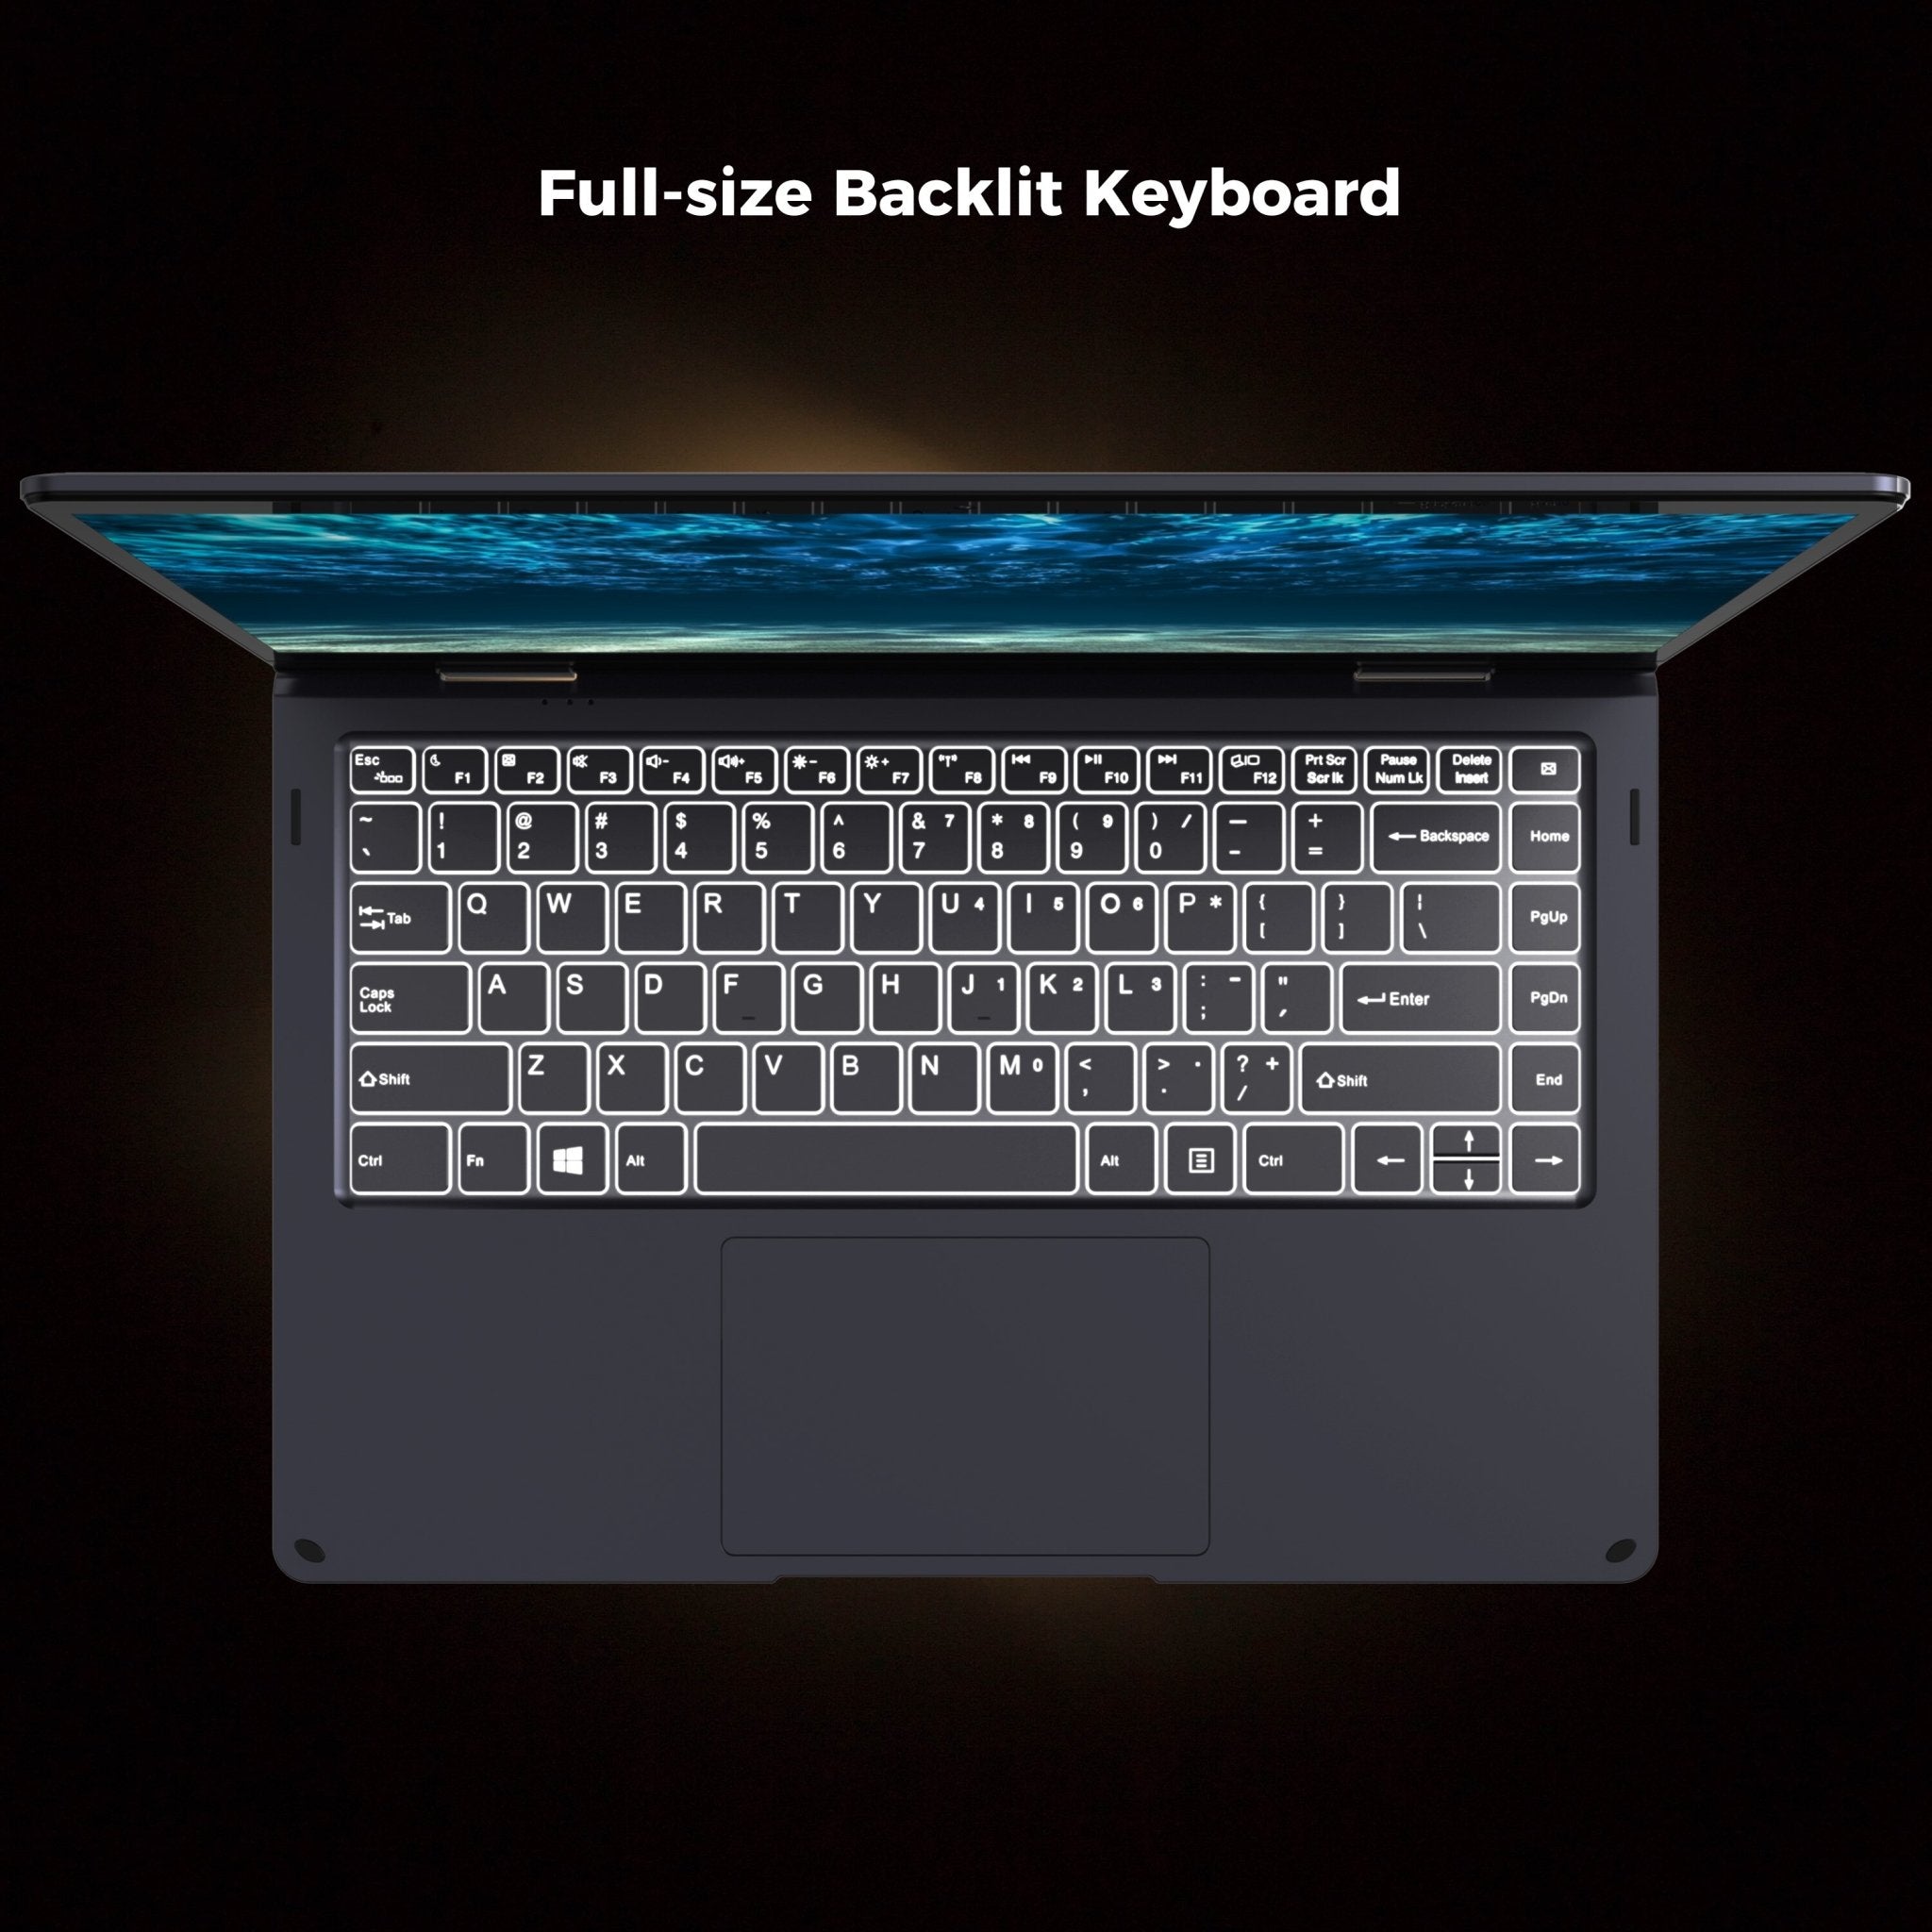 XIDU Laptop PhilBook Max 14.1'' FHD 8G DDR3 Intel Atom E3950 Quad Core Business Laptop 128G SSD ROM Ultrabook Backlit Keyboard GreatEagleInc